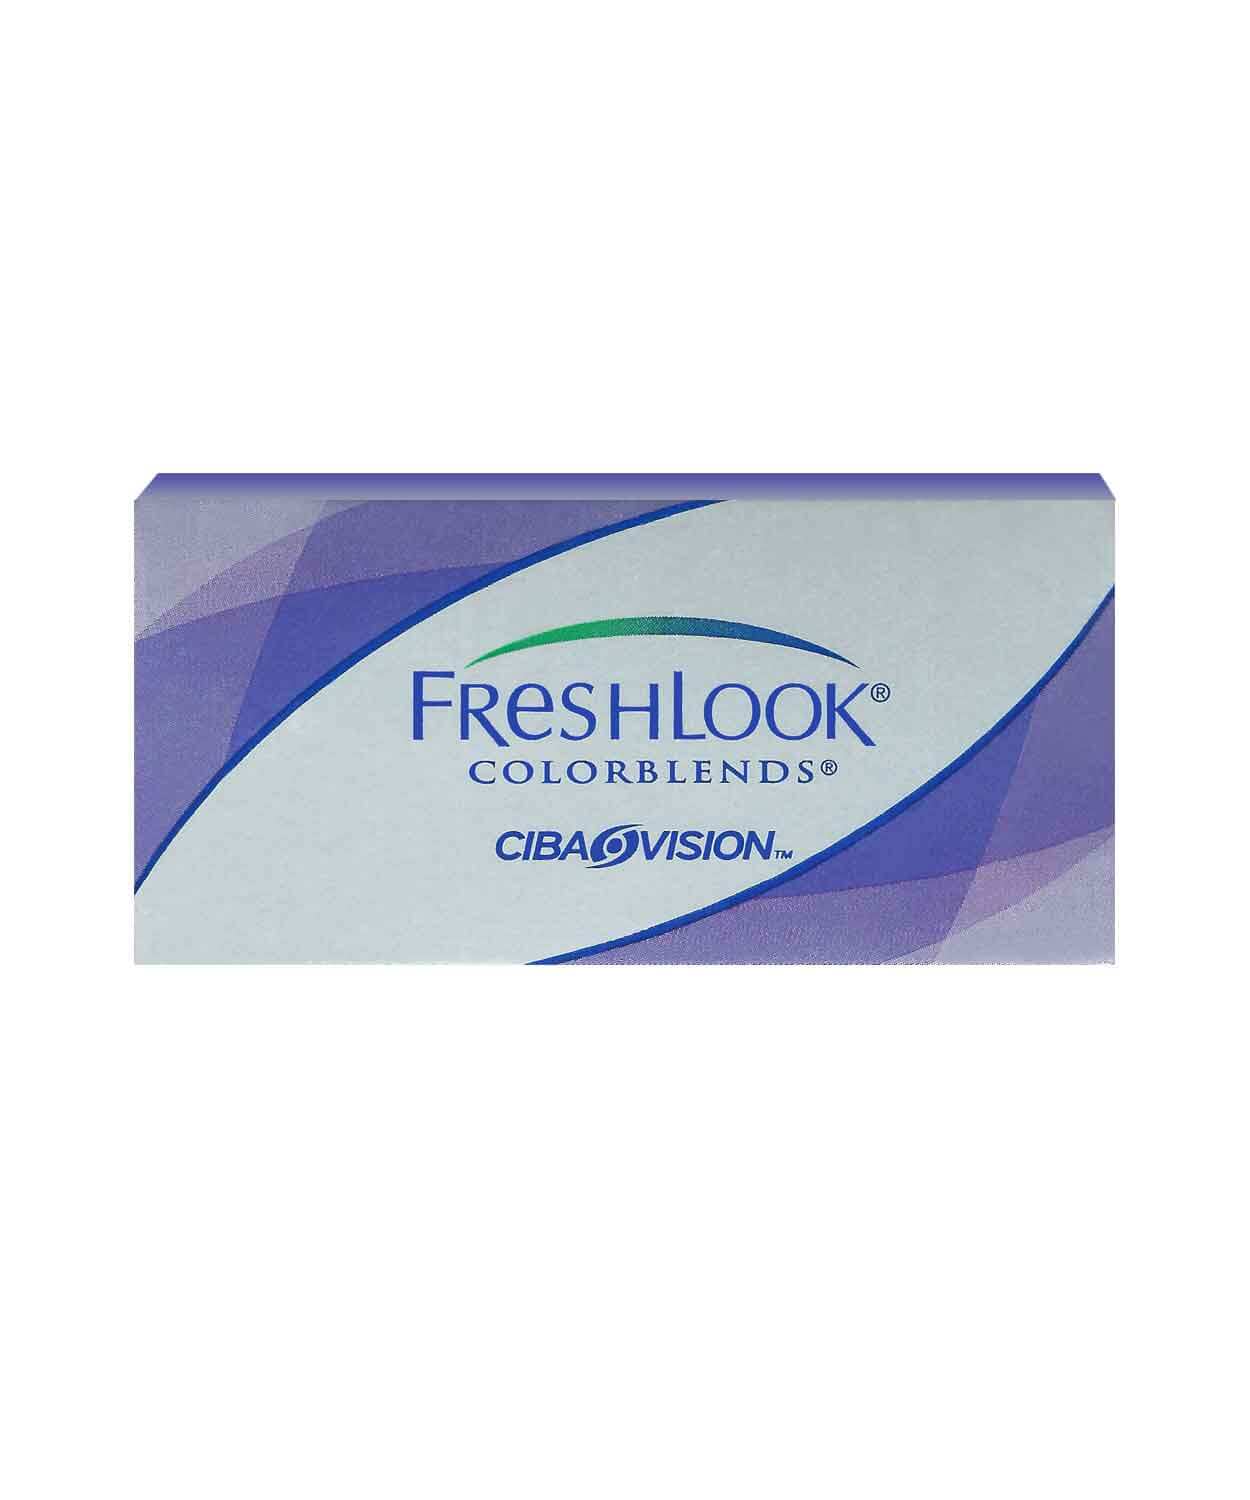 freshlook-colorblends-the-optometry-practice